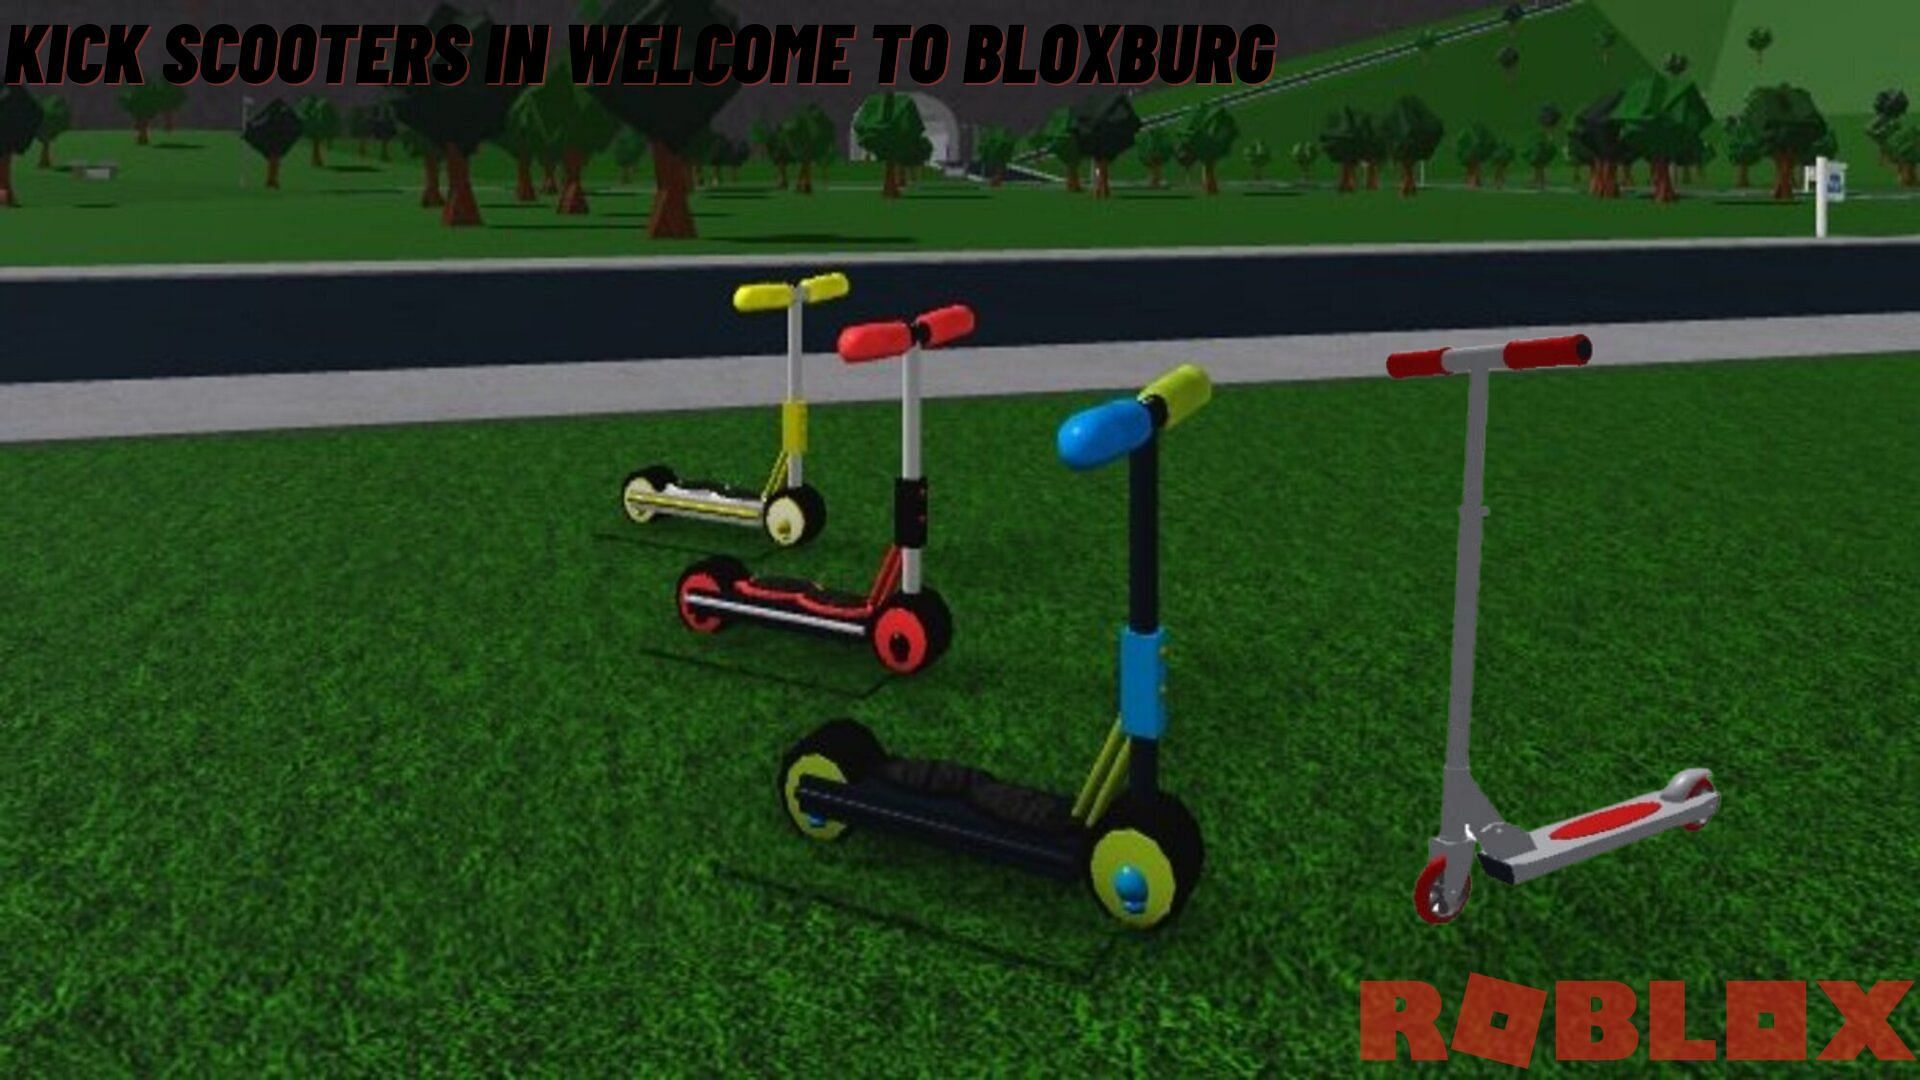 Welcome to Bloxburg, Roblox Wiki